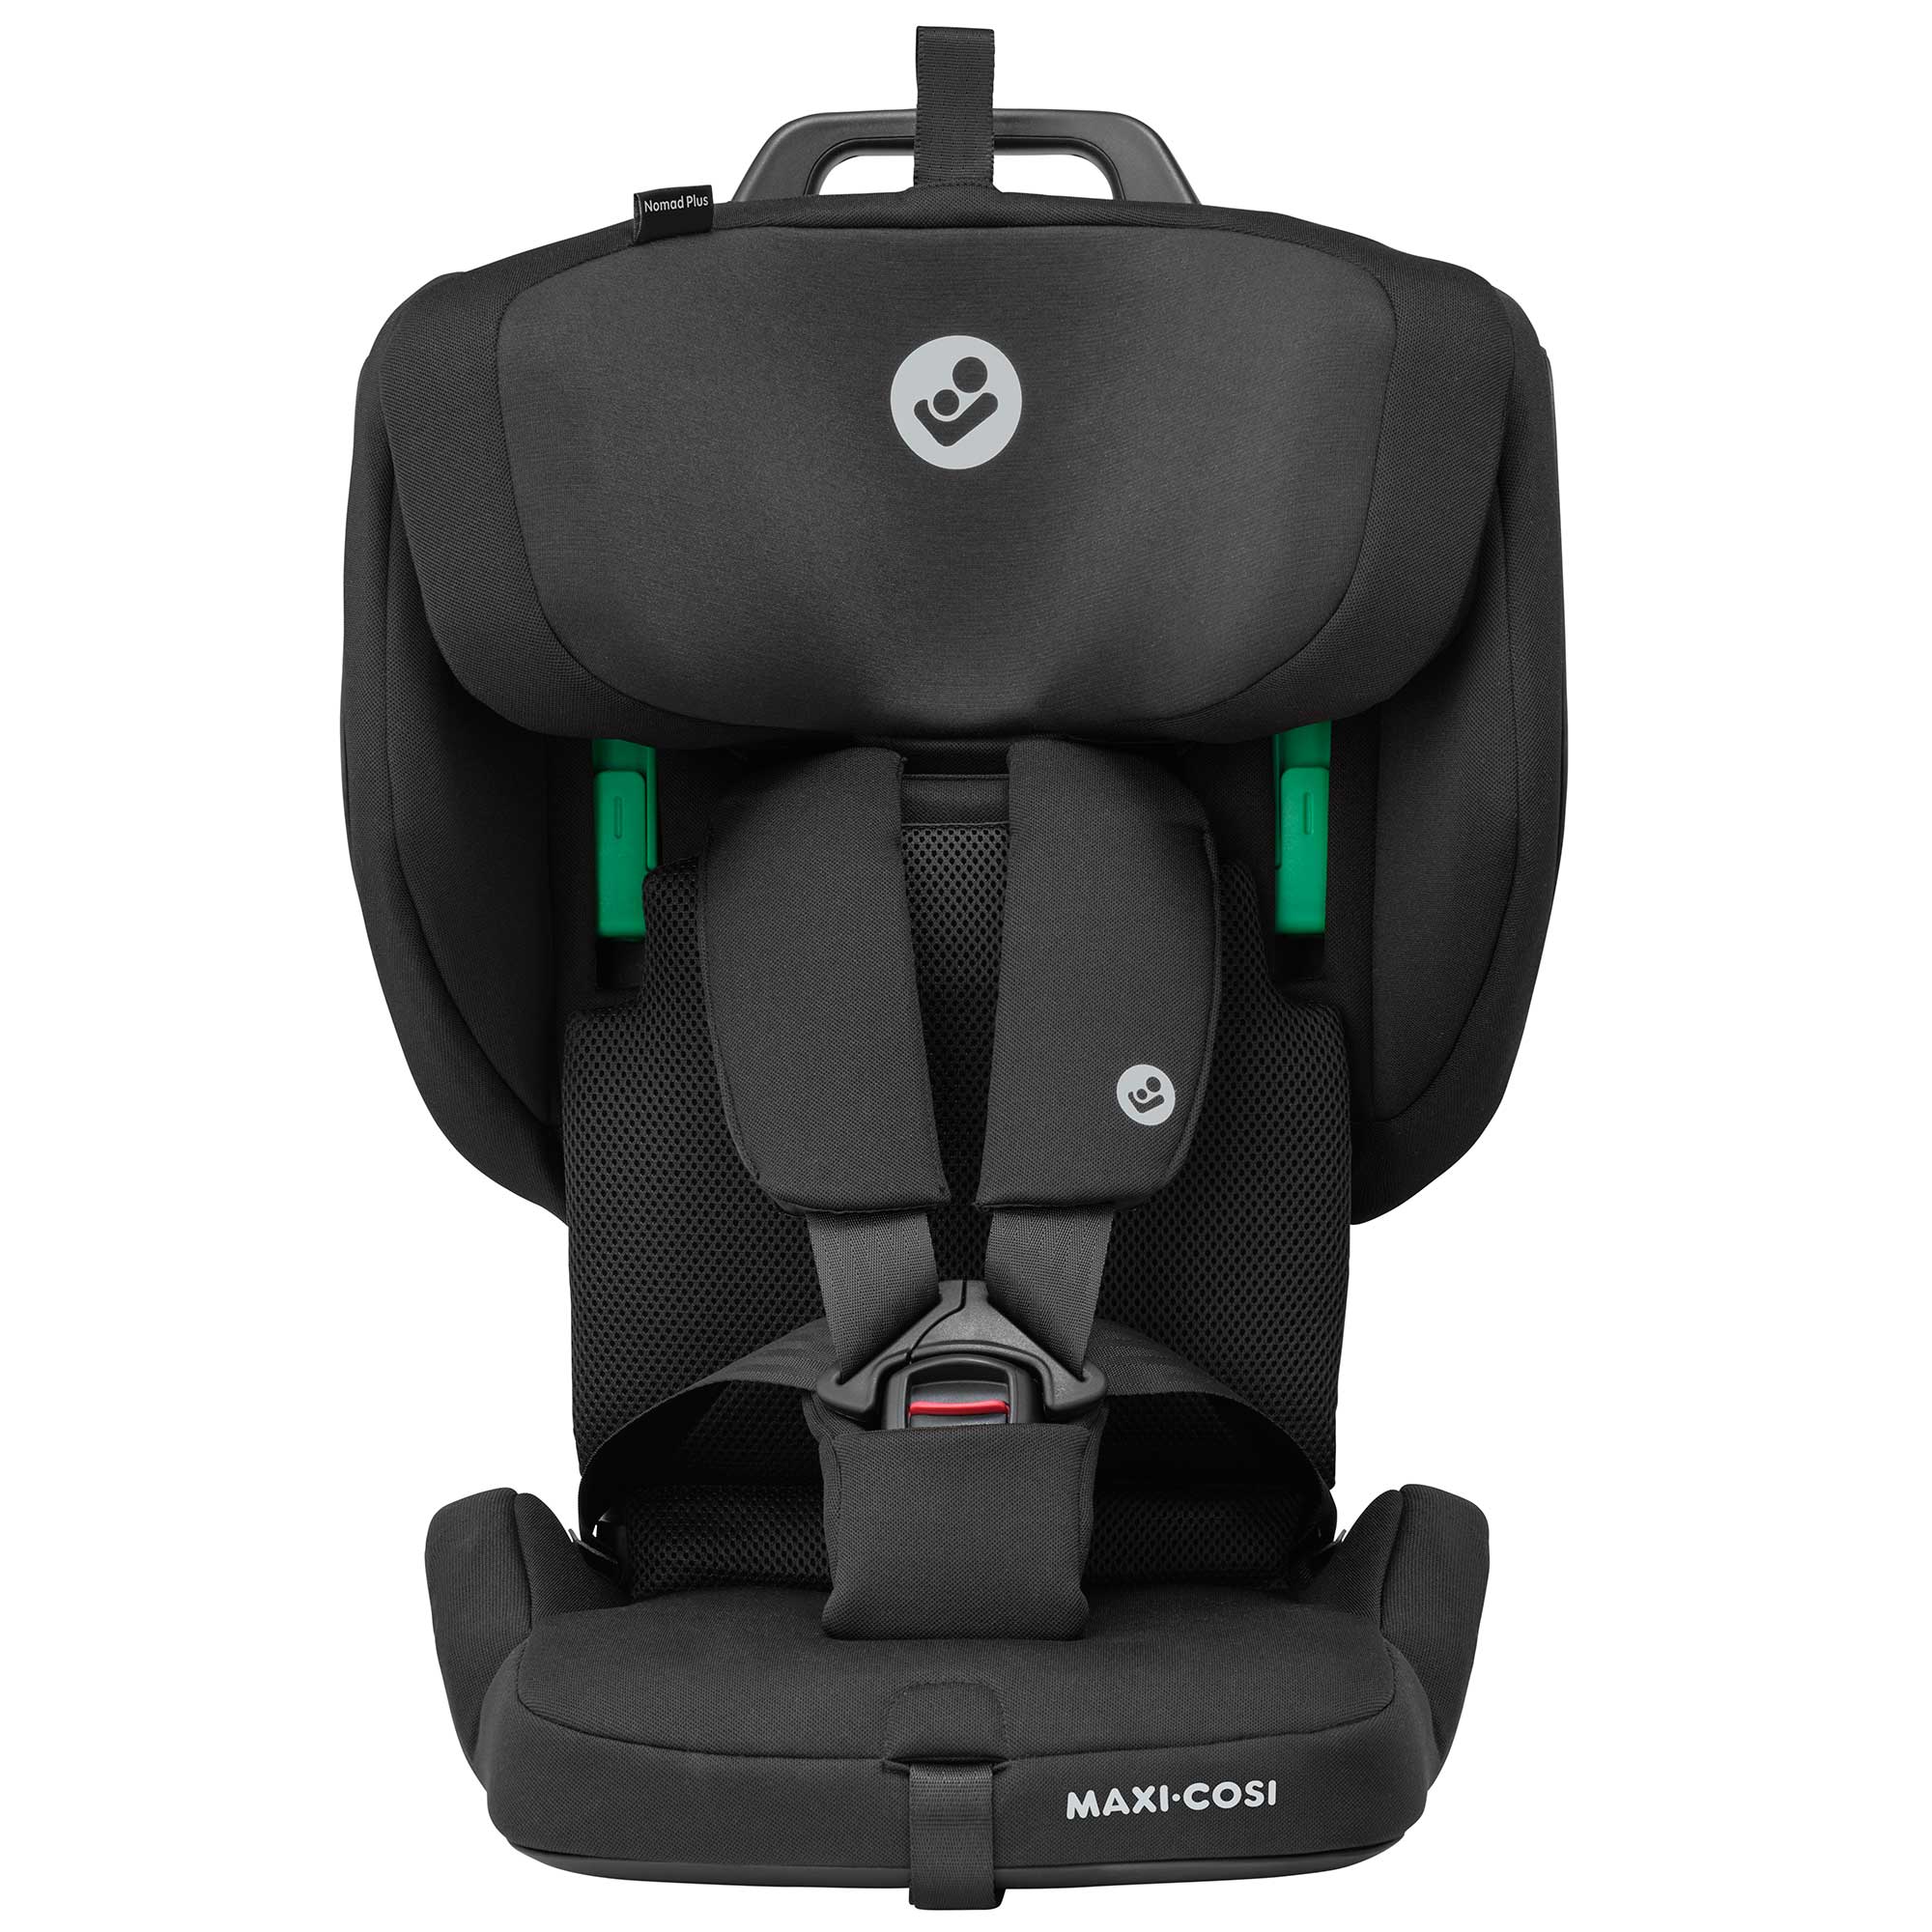 Maxi-Cosi Nomad Plus Folding Car Seat in Authentic Black Combination Car Seats 8062671110 8712930187158